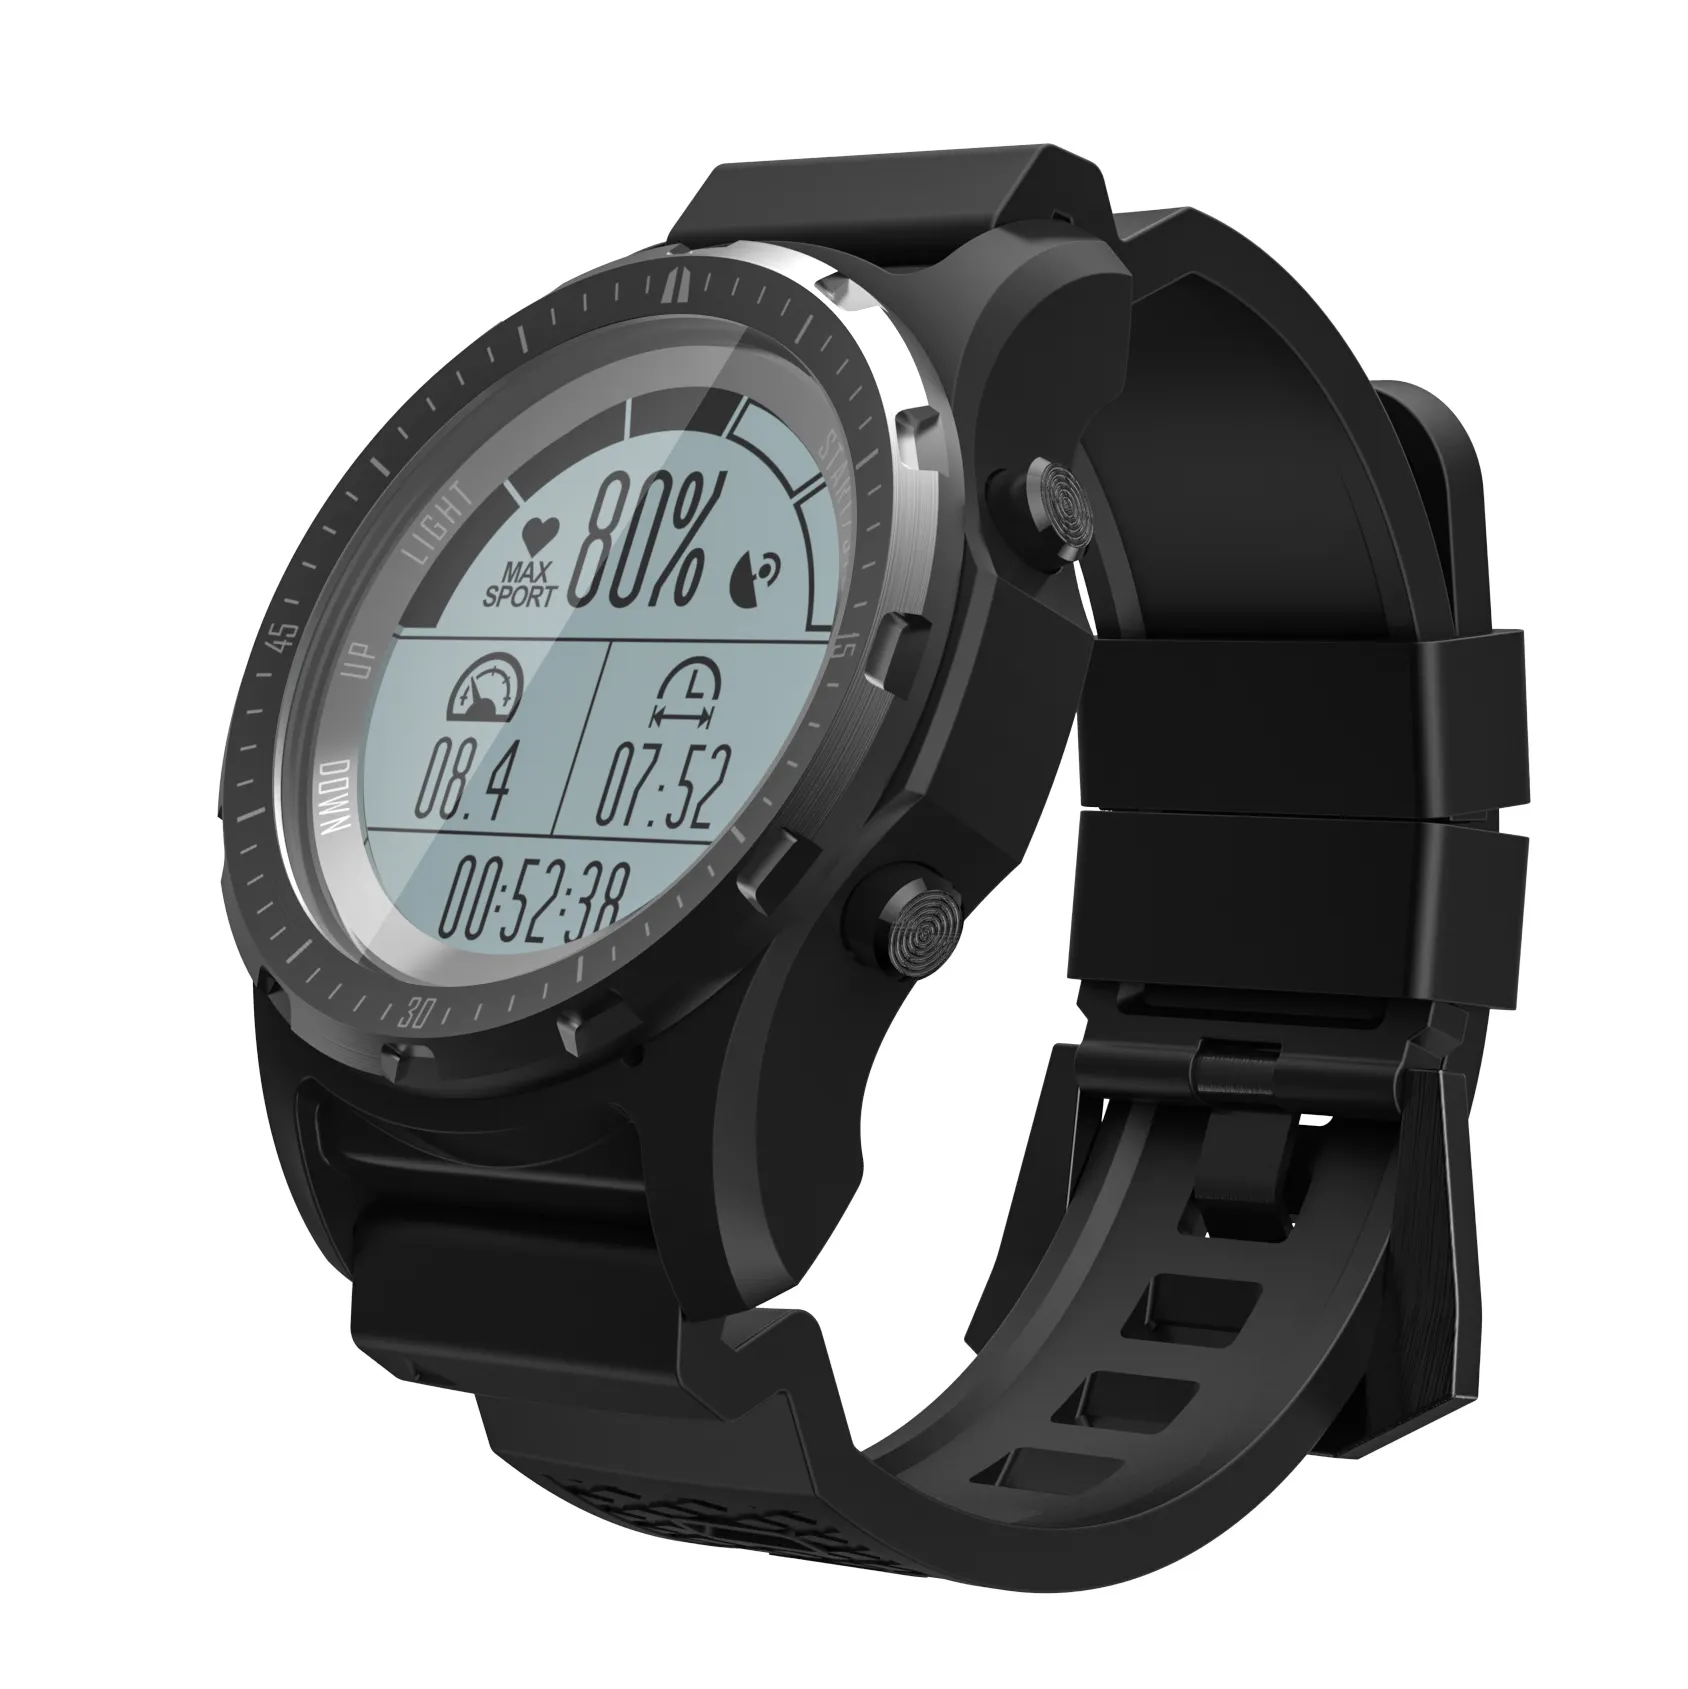 S966 Hiking Sports Smartwatch Waterproof Heart Rate Monitor Altitude Compass Pedometer reloj inteligente Men GPS Smart Watch